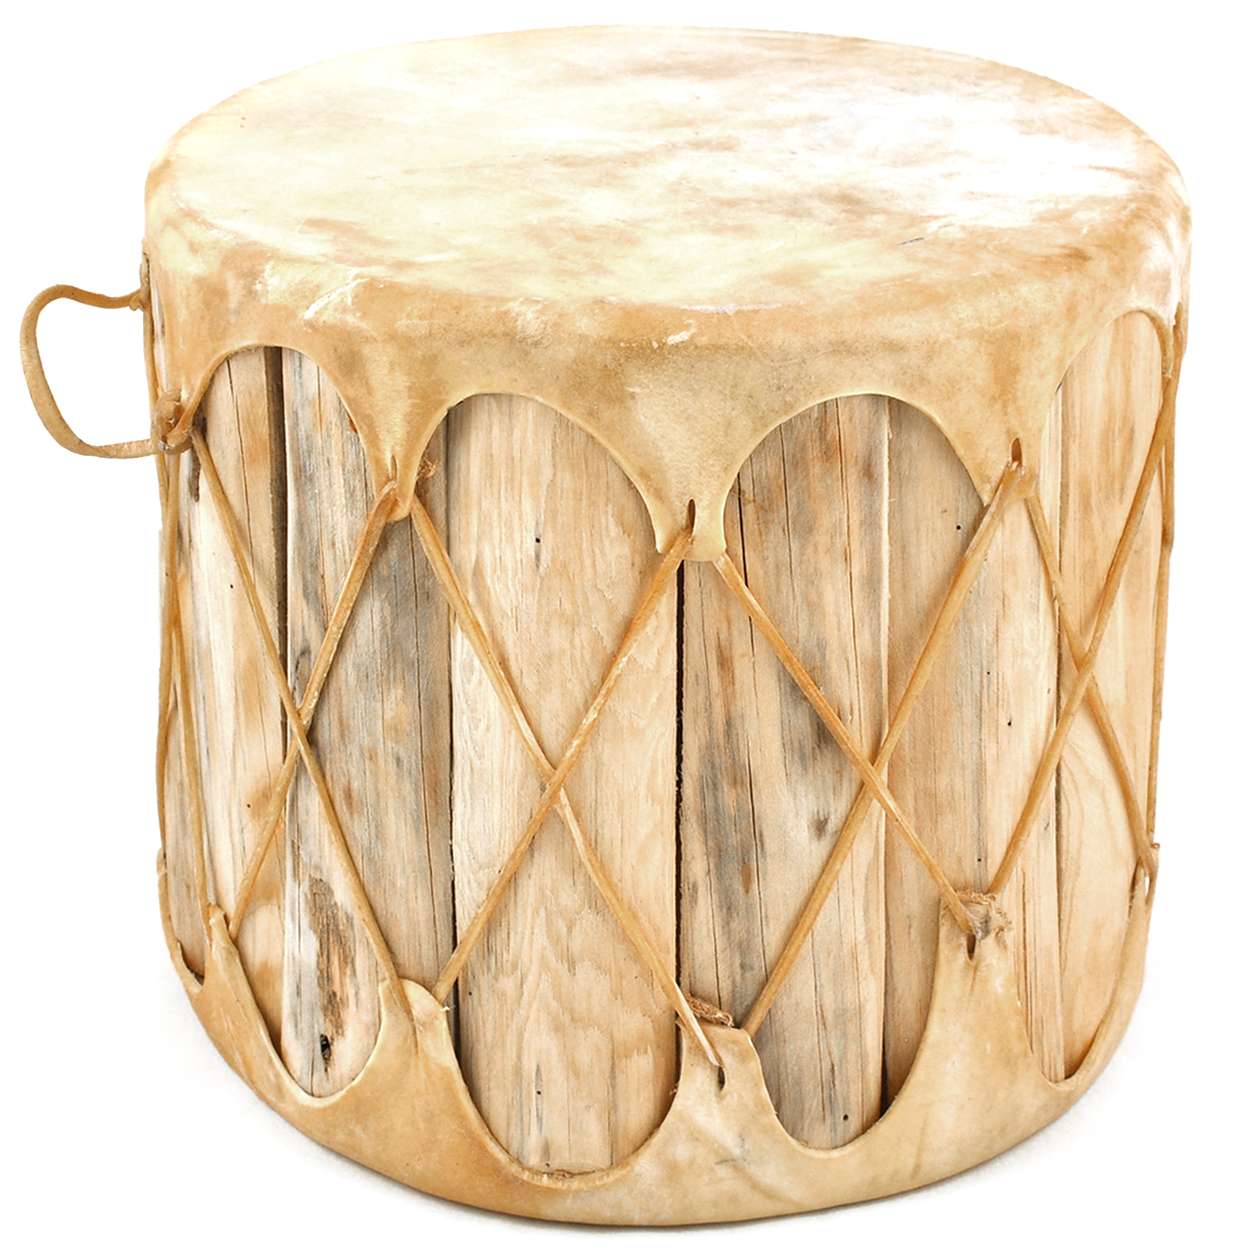 Natural Rawhide Wooden Drum - 10in x 12in